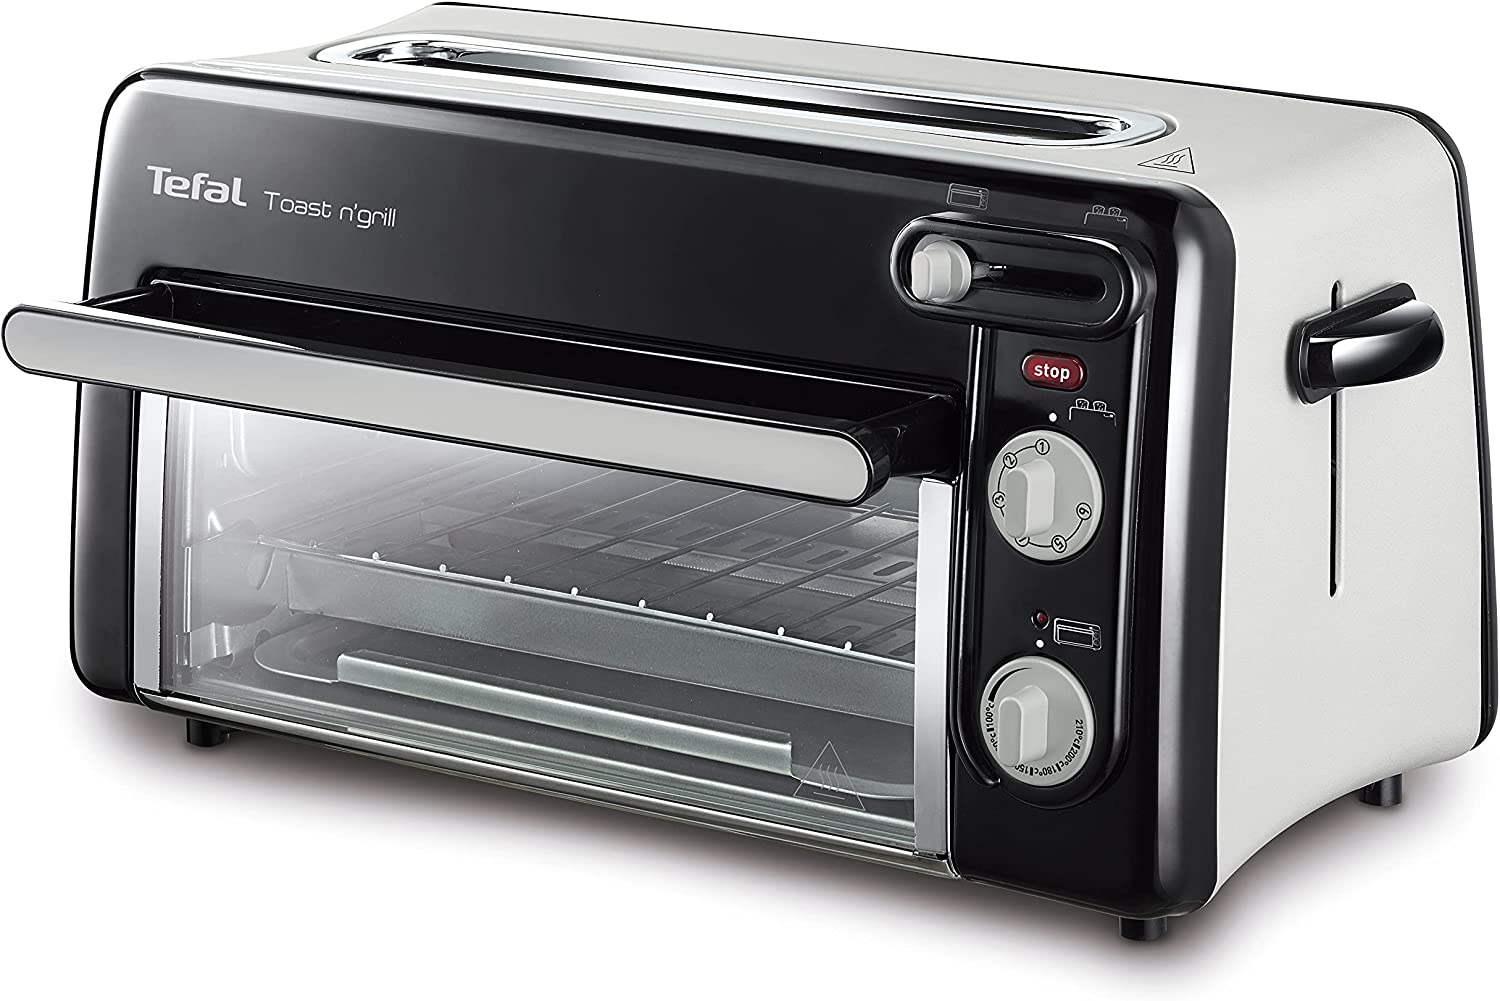 Tefal Toast n\' Grill TL6008 | 2 in 1 Toaster and Mini Oven | Very Energy Efficient and Fast | 1300 Watt | Black / Aluminium Matt